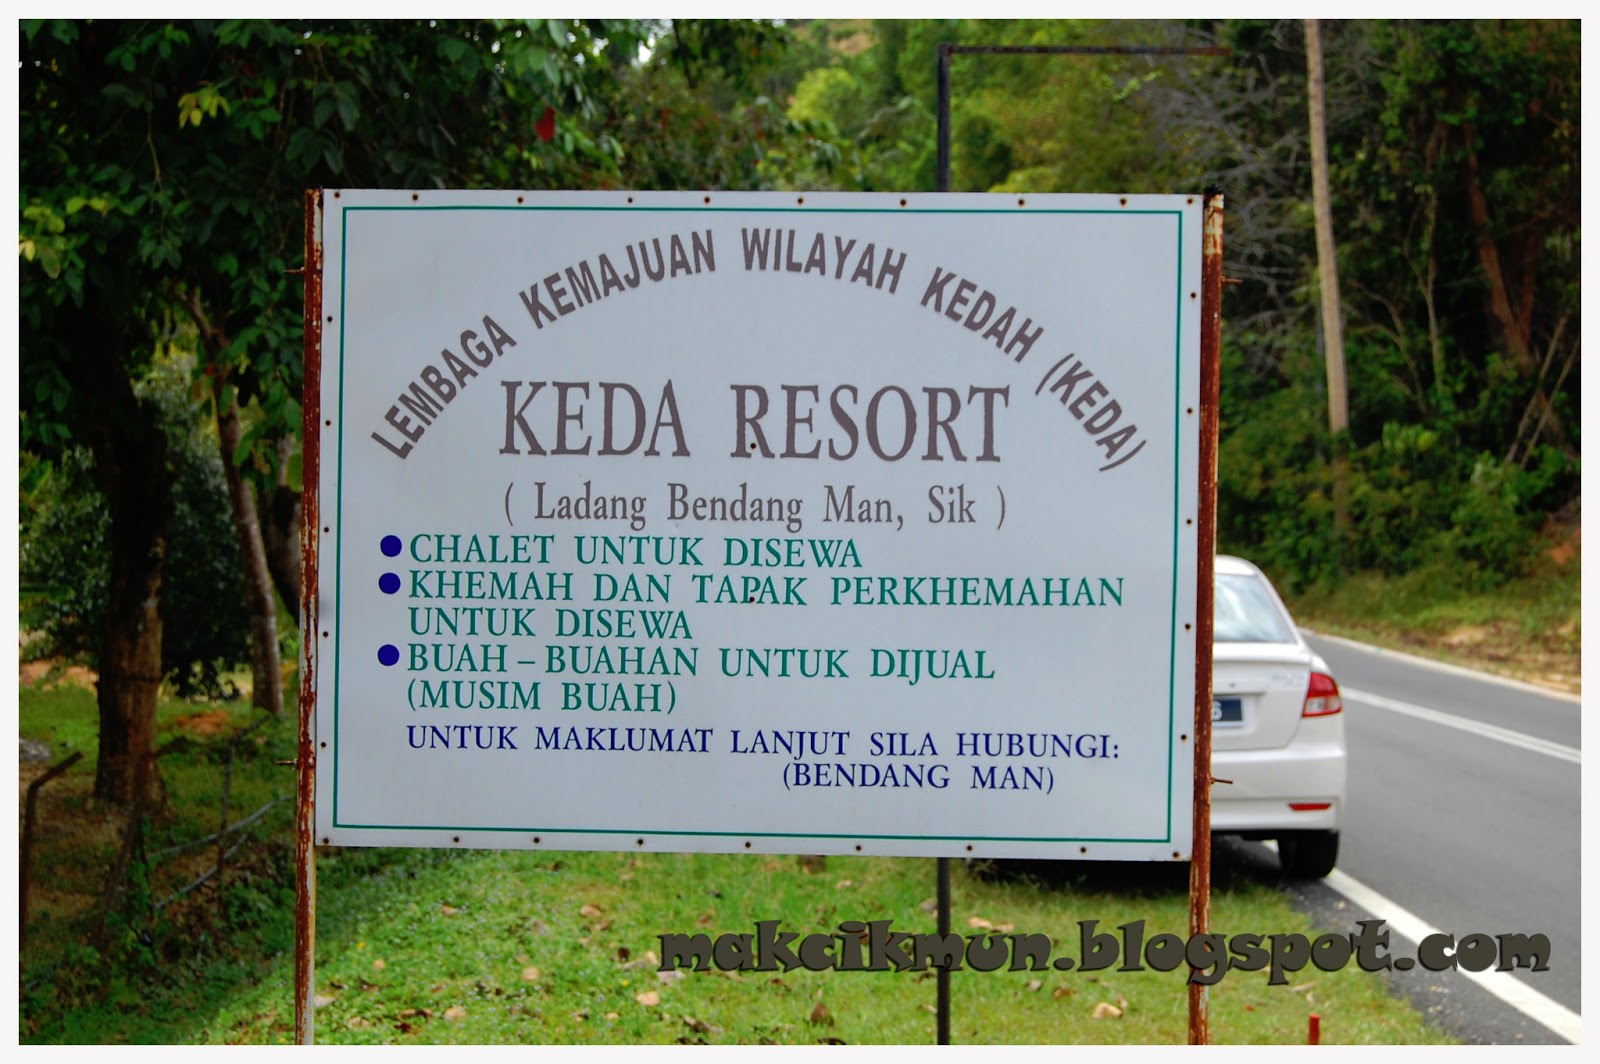 Bendang man resort keda Kedah Cheap